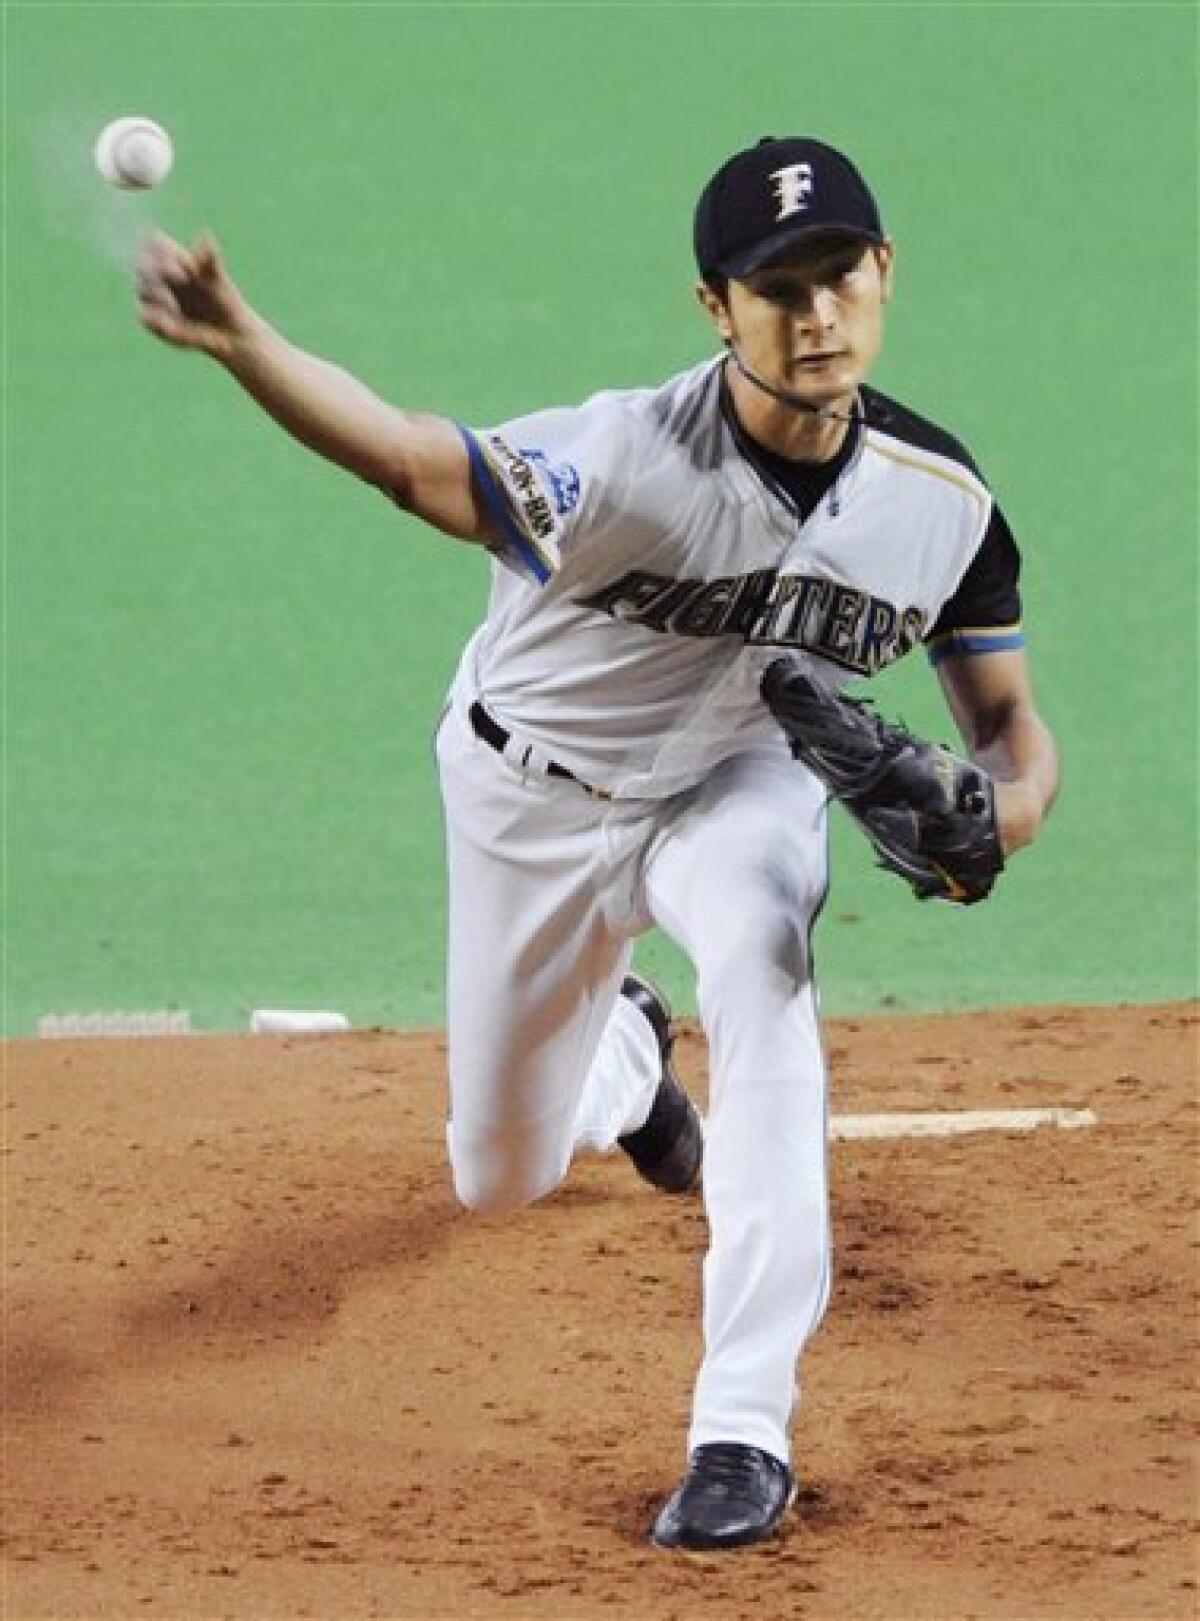 Ichiro pitches, Matsuzaka hits in exhibition - The Japan News